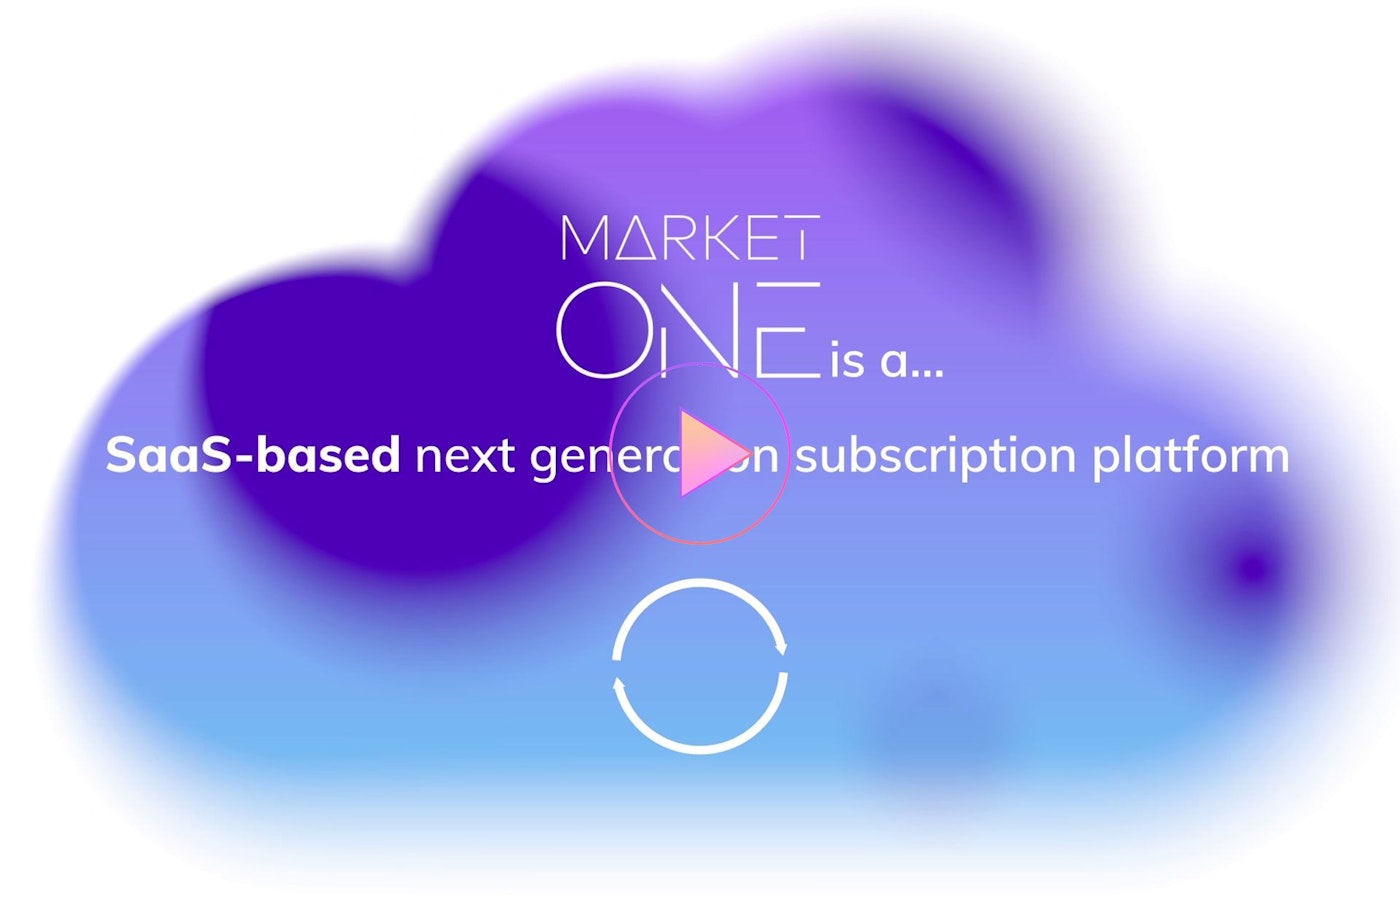 The next generation SaaS-based subscription platform